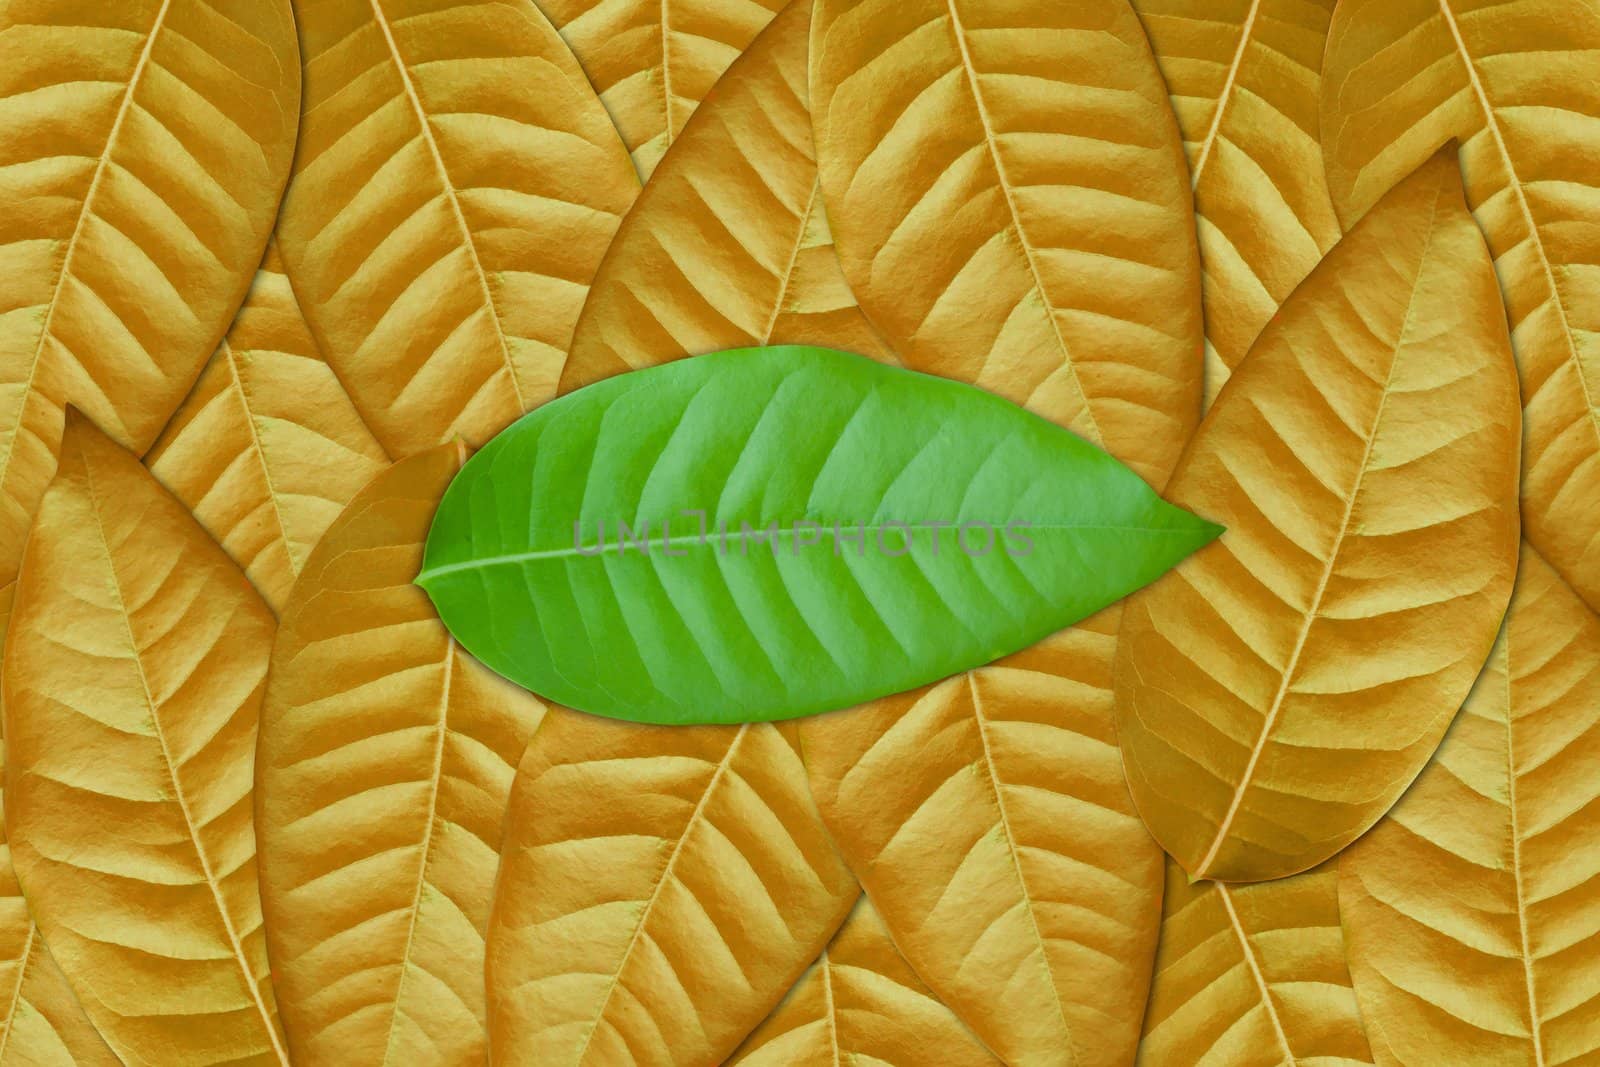 Green leaf on brown leaves background